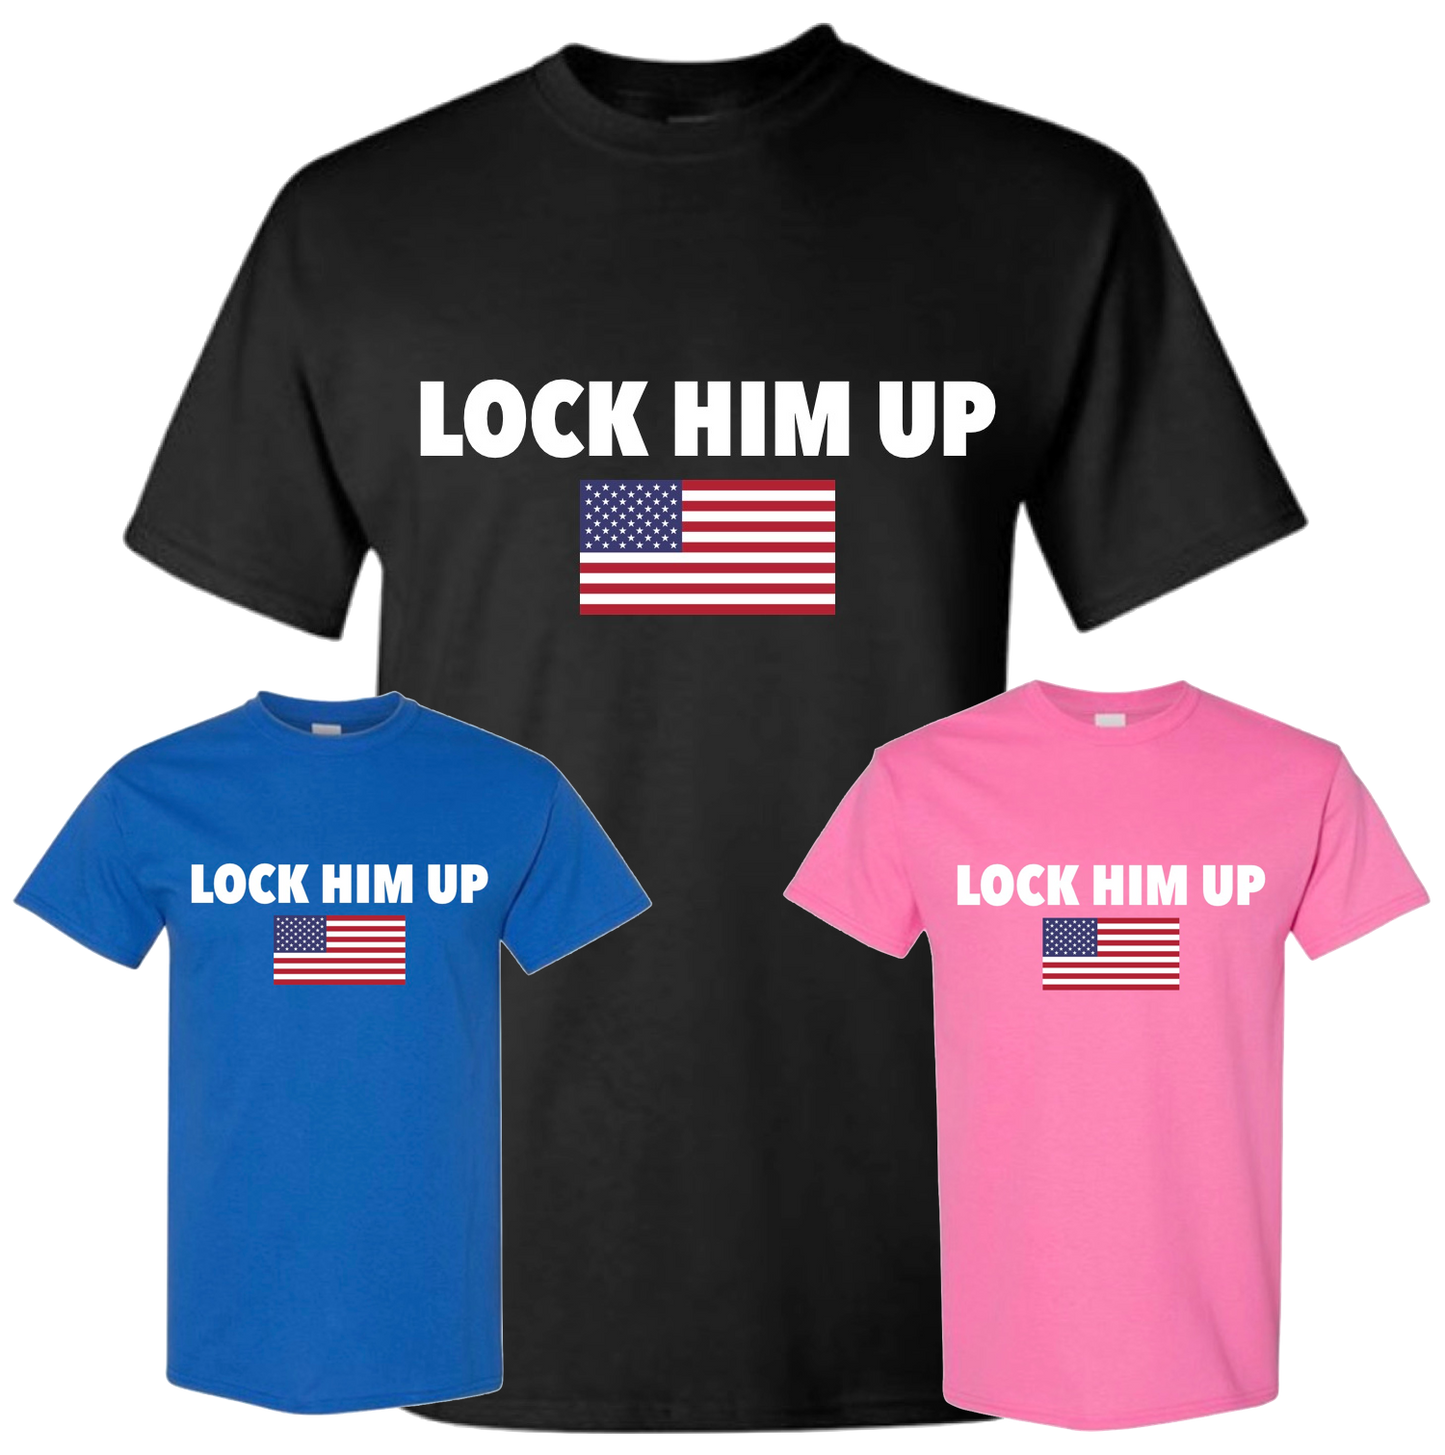 Lock Him Up Shirt — Free Shipping!